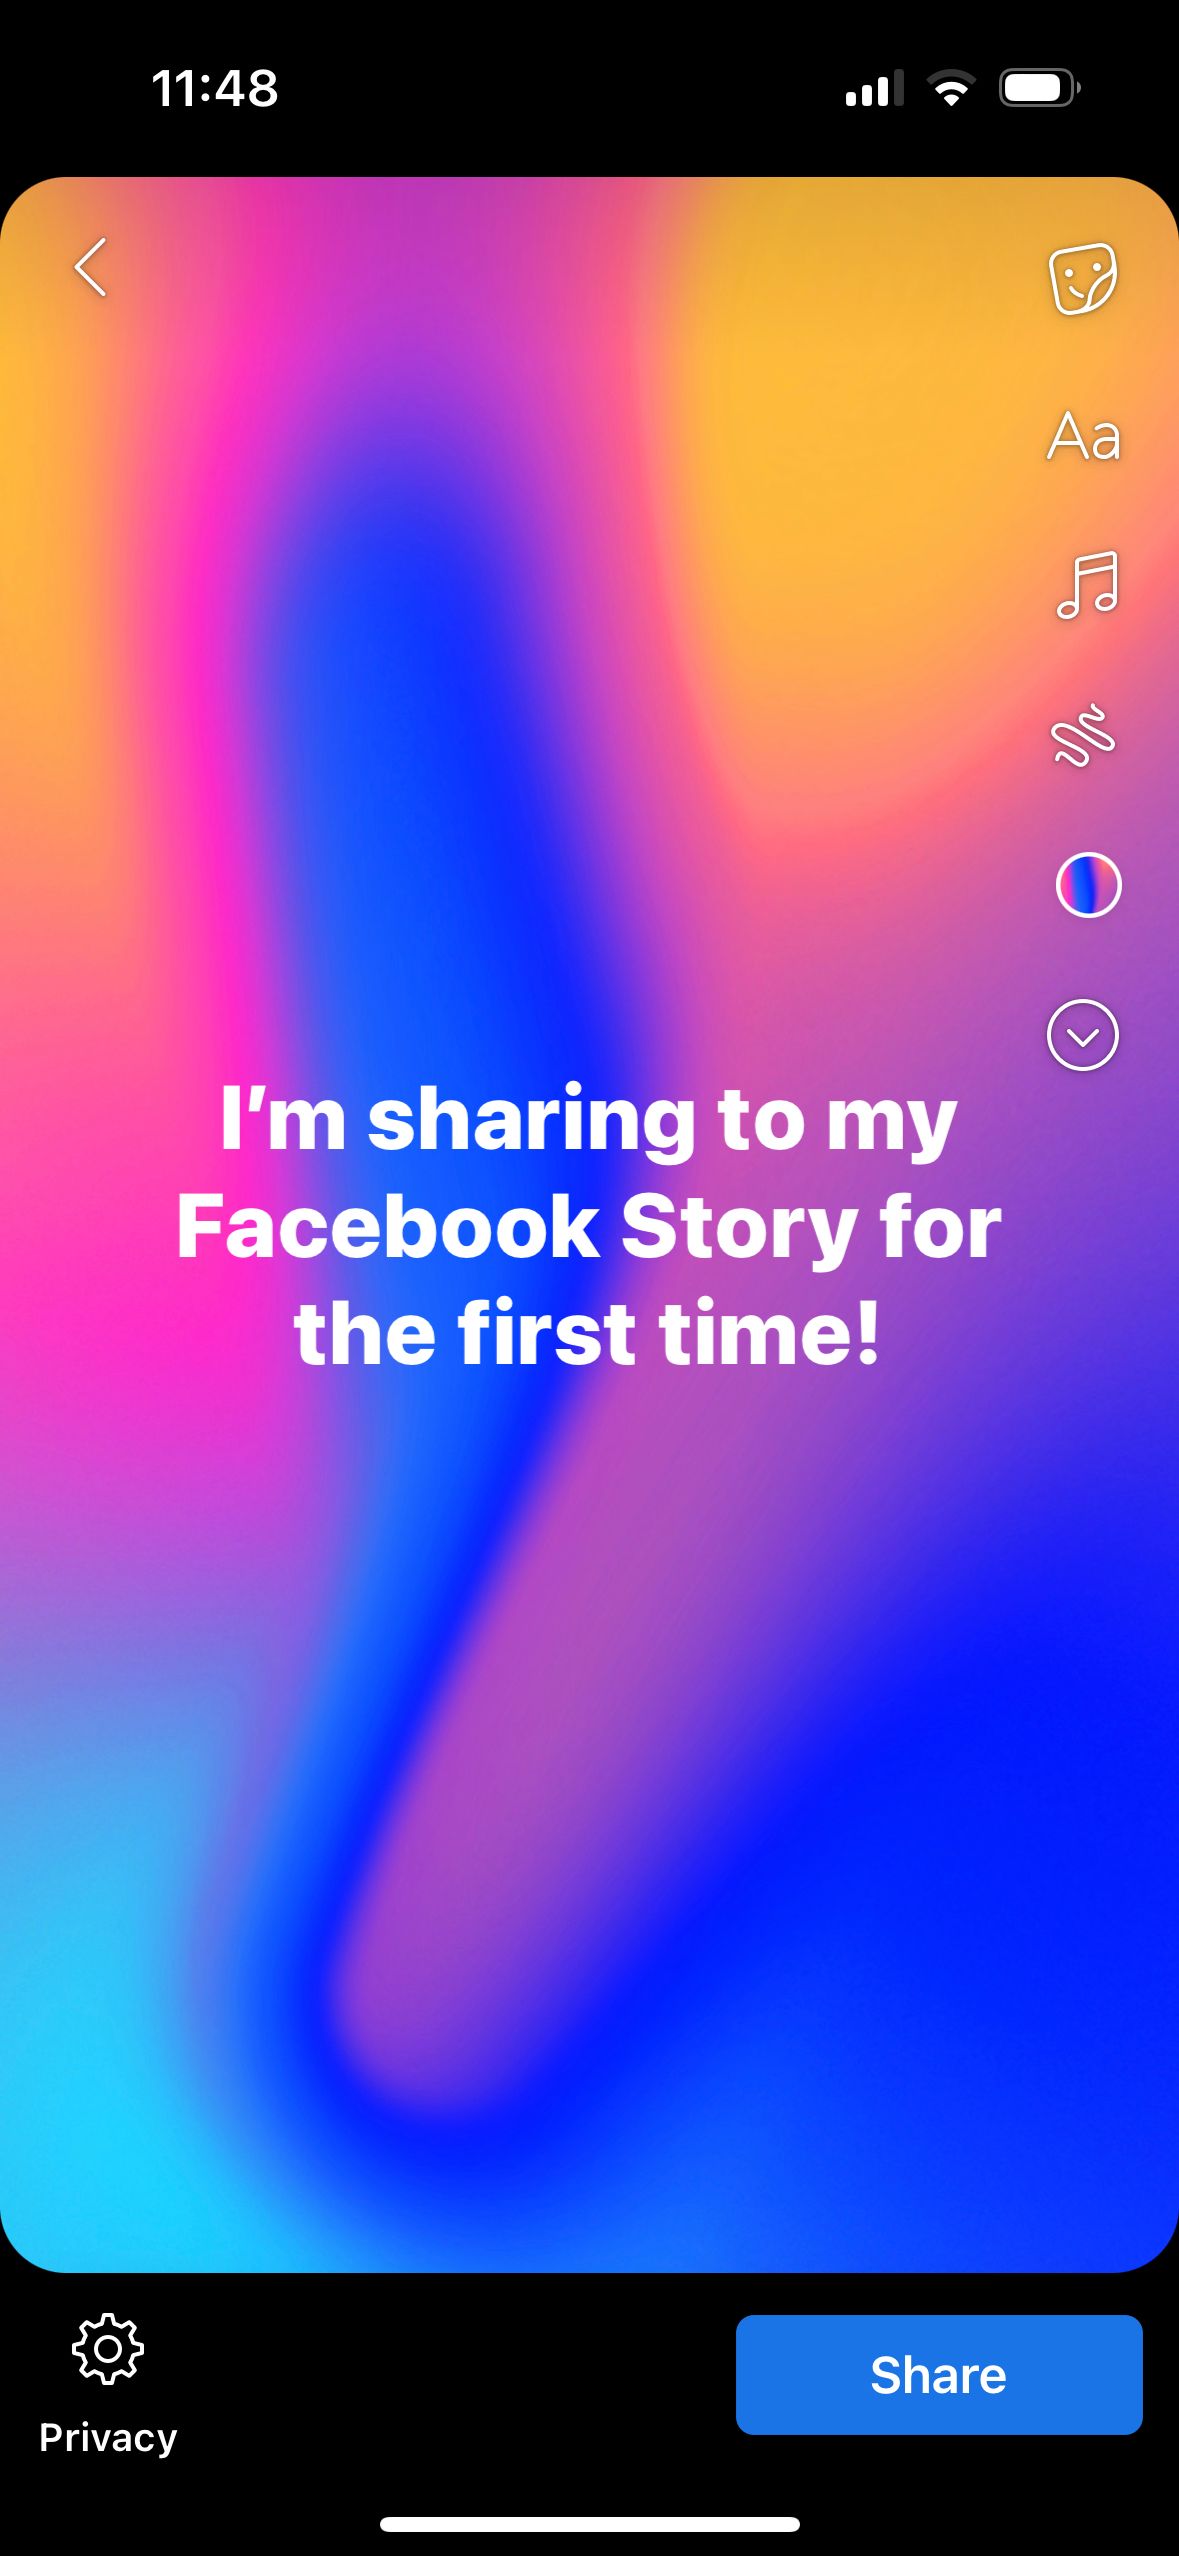 facebook stories